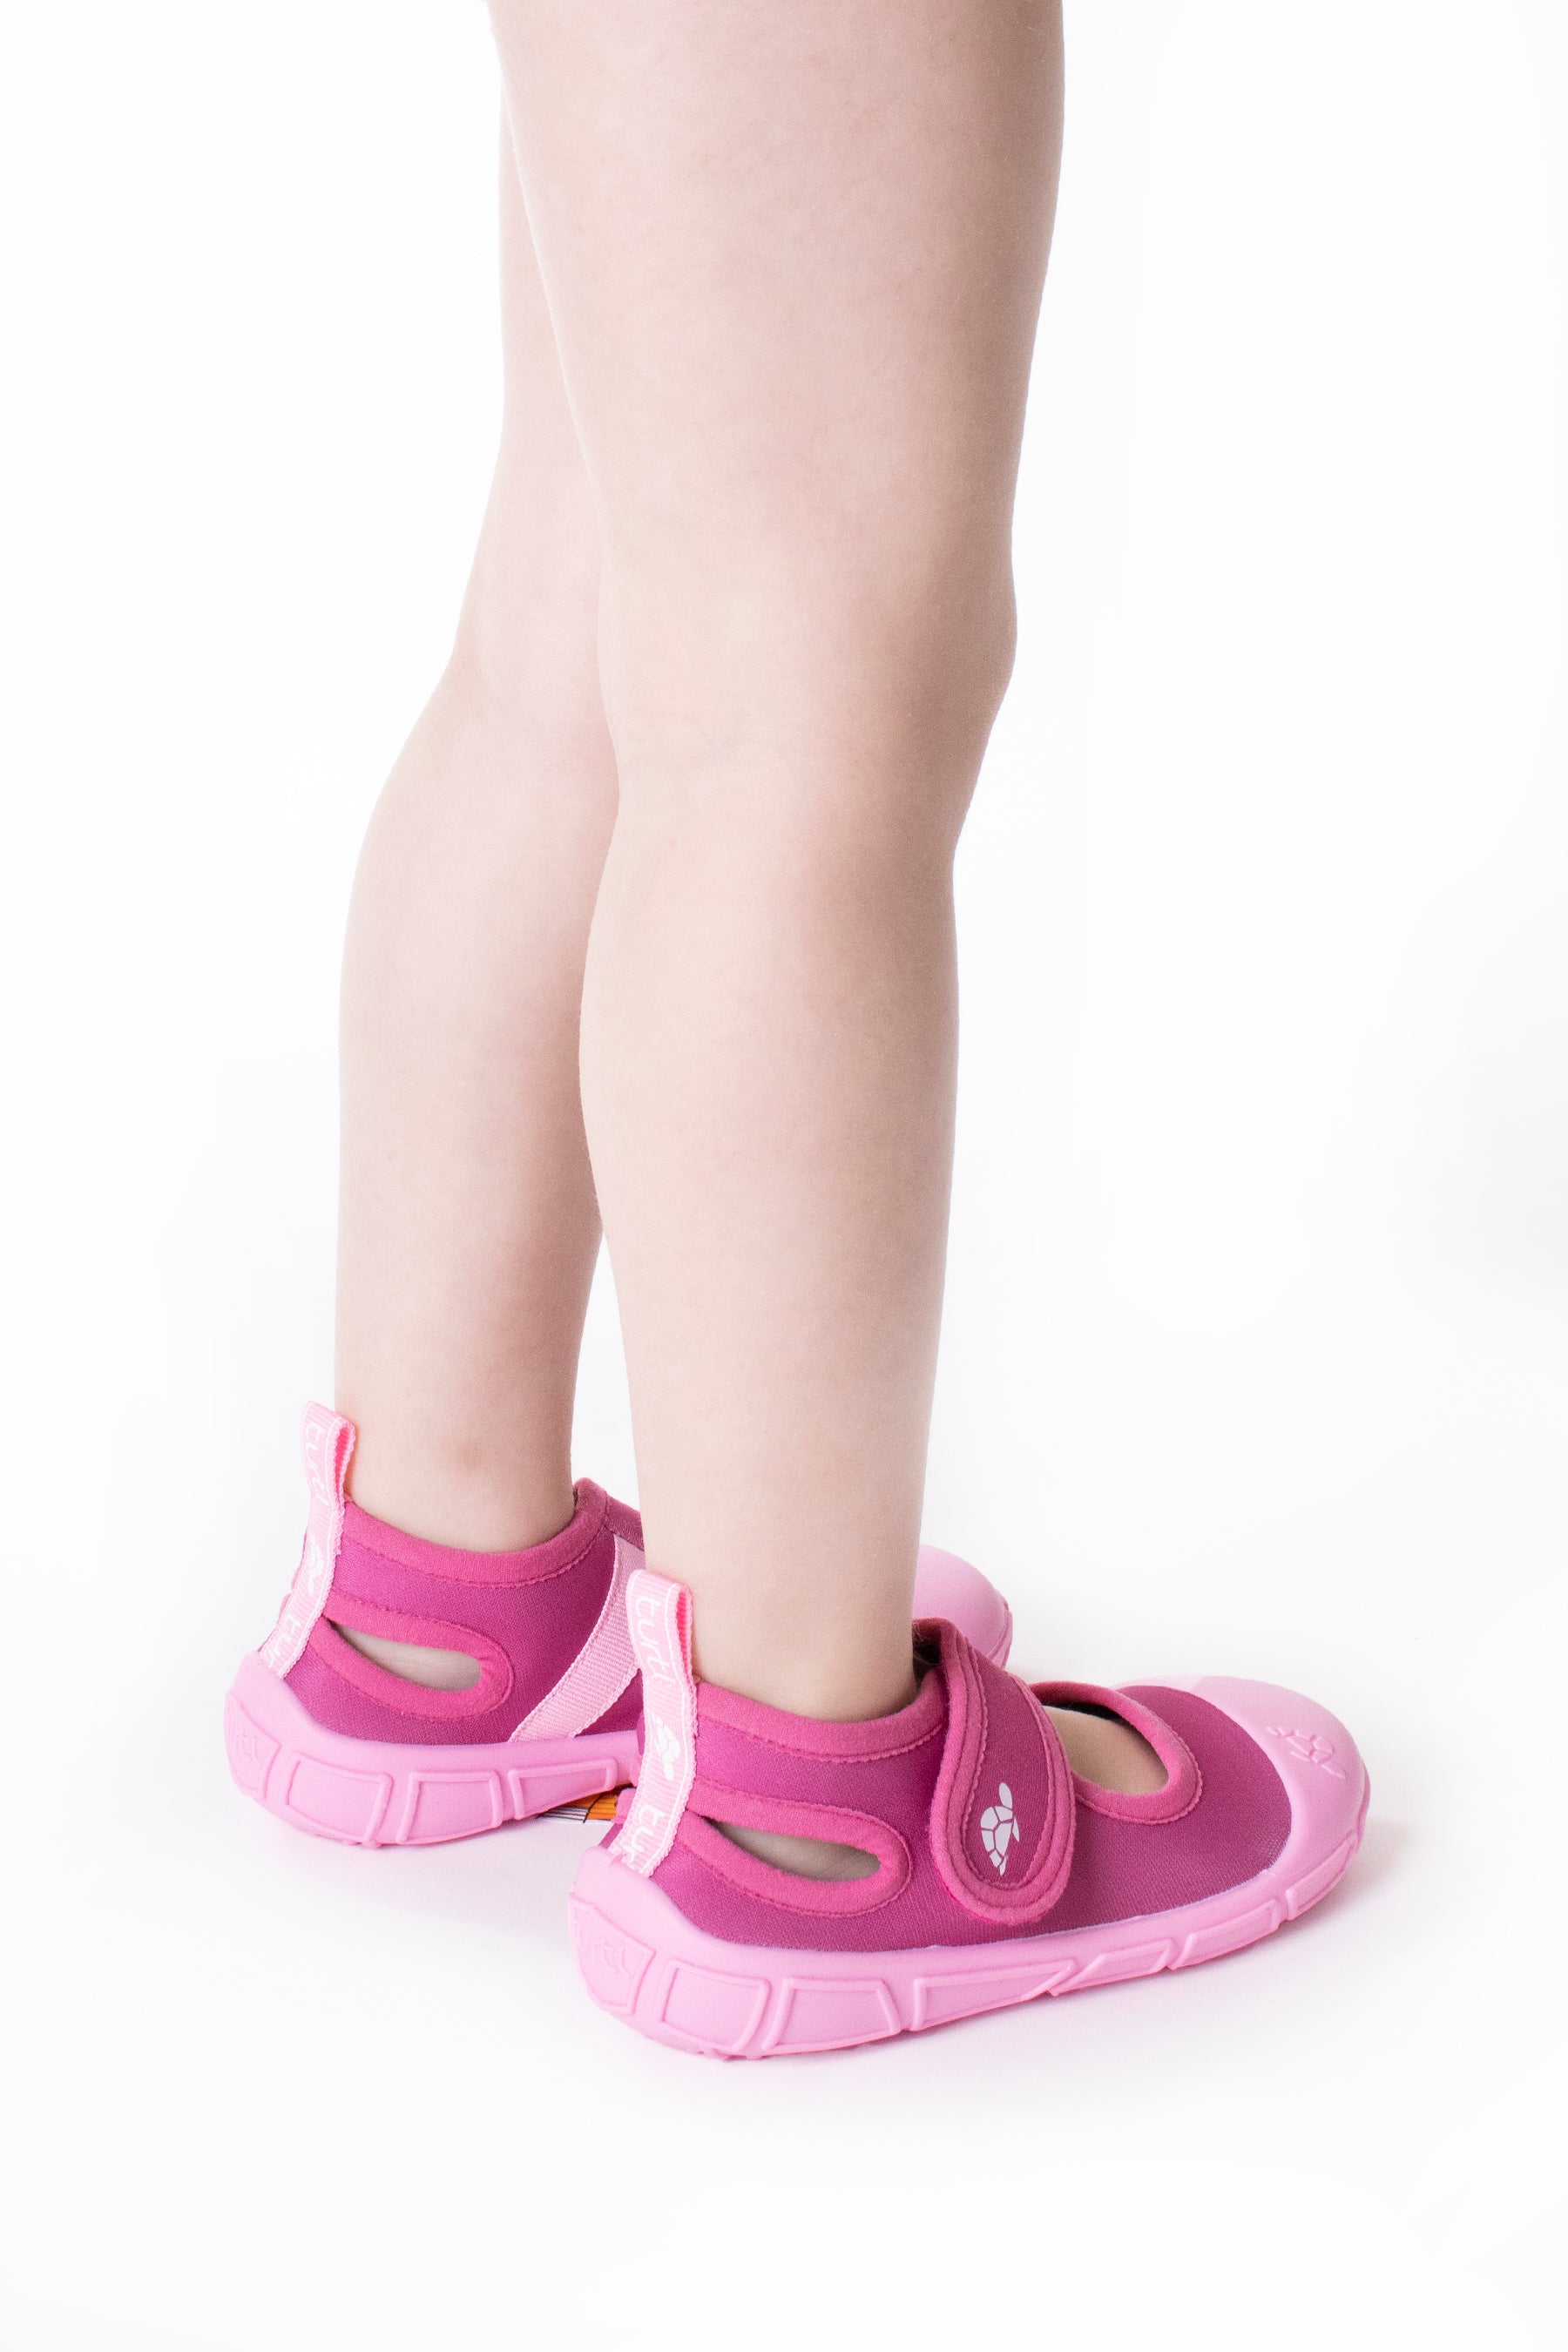 sports sandal in raspberry/pink